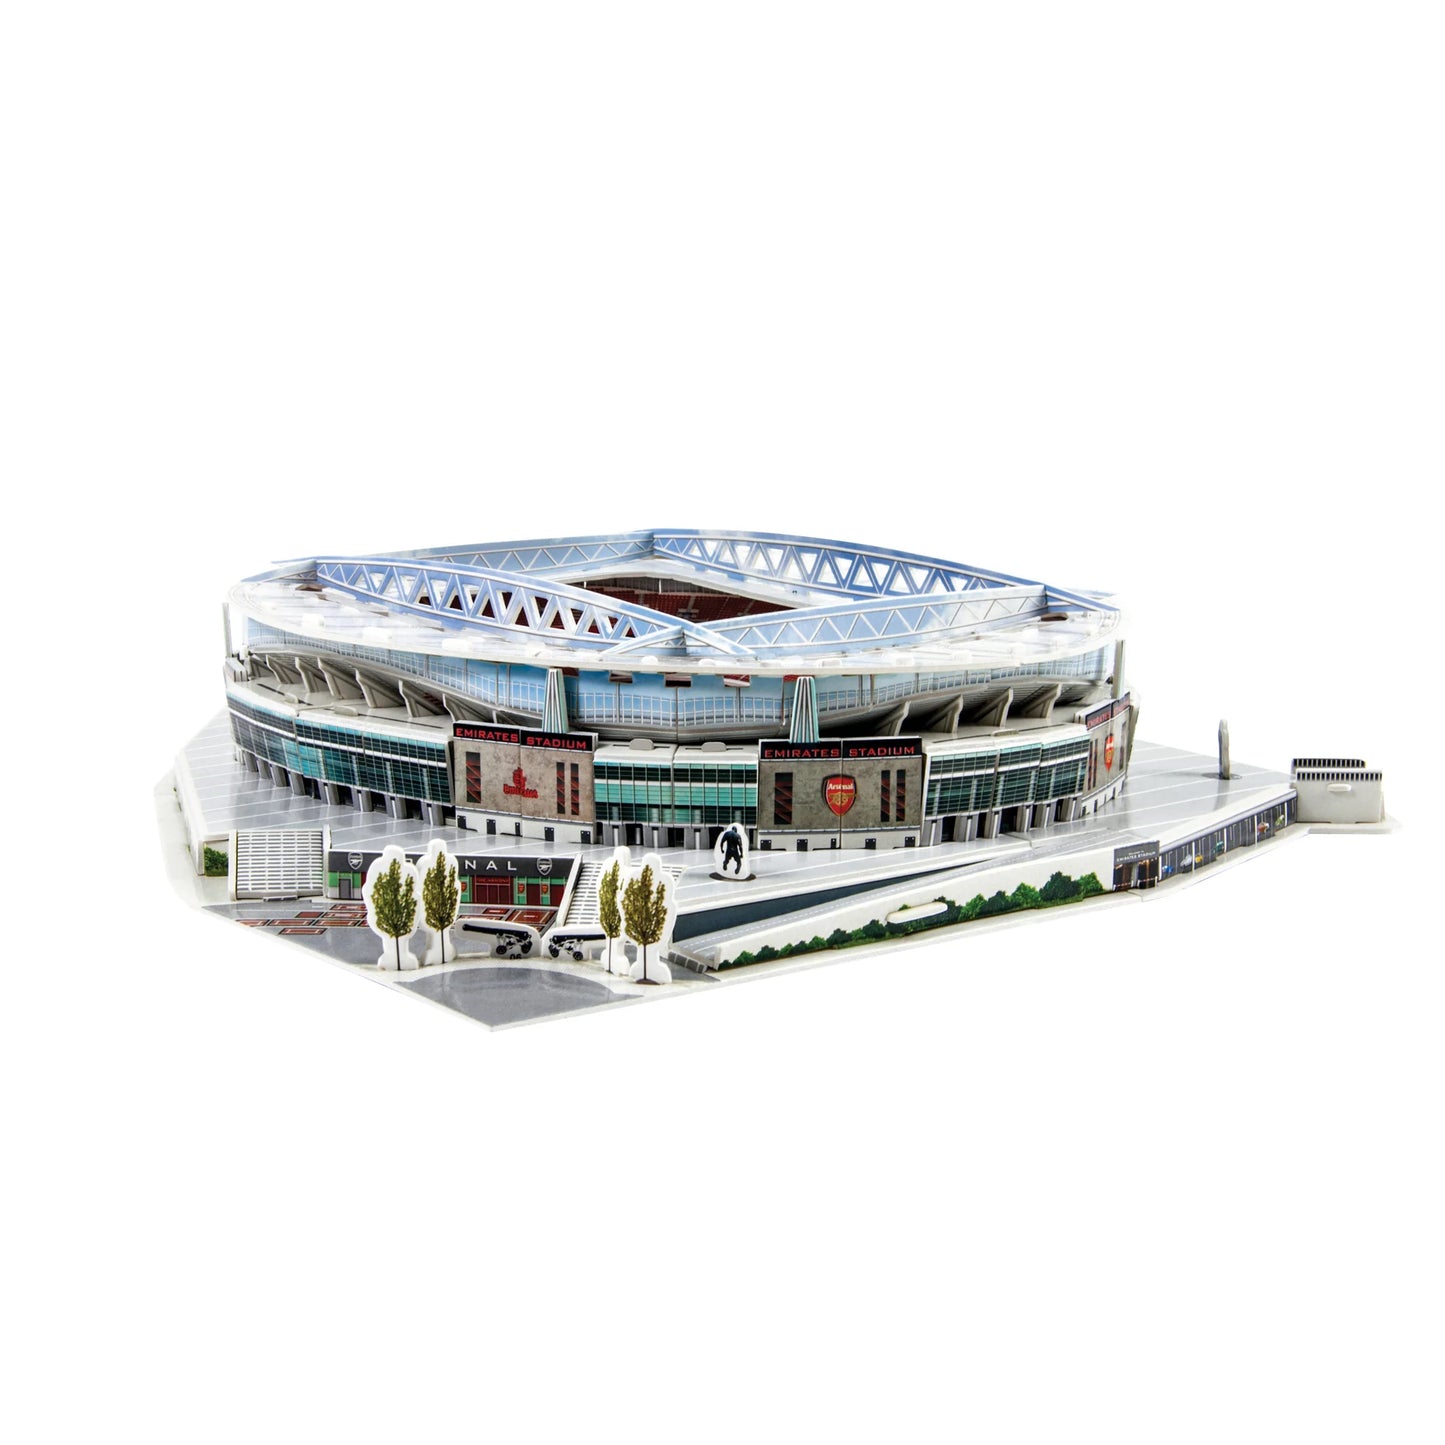 Arsenal Emirates Stadium 3D Puzzle - Zhivago Gifts